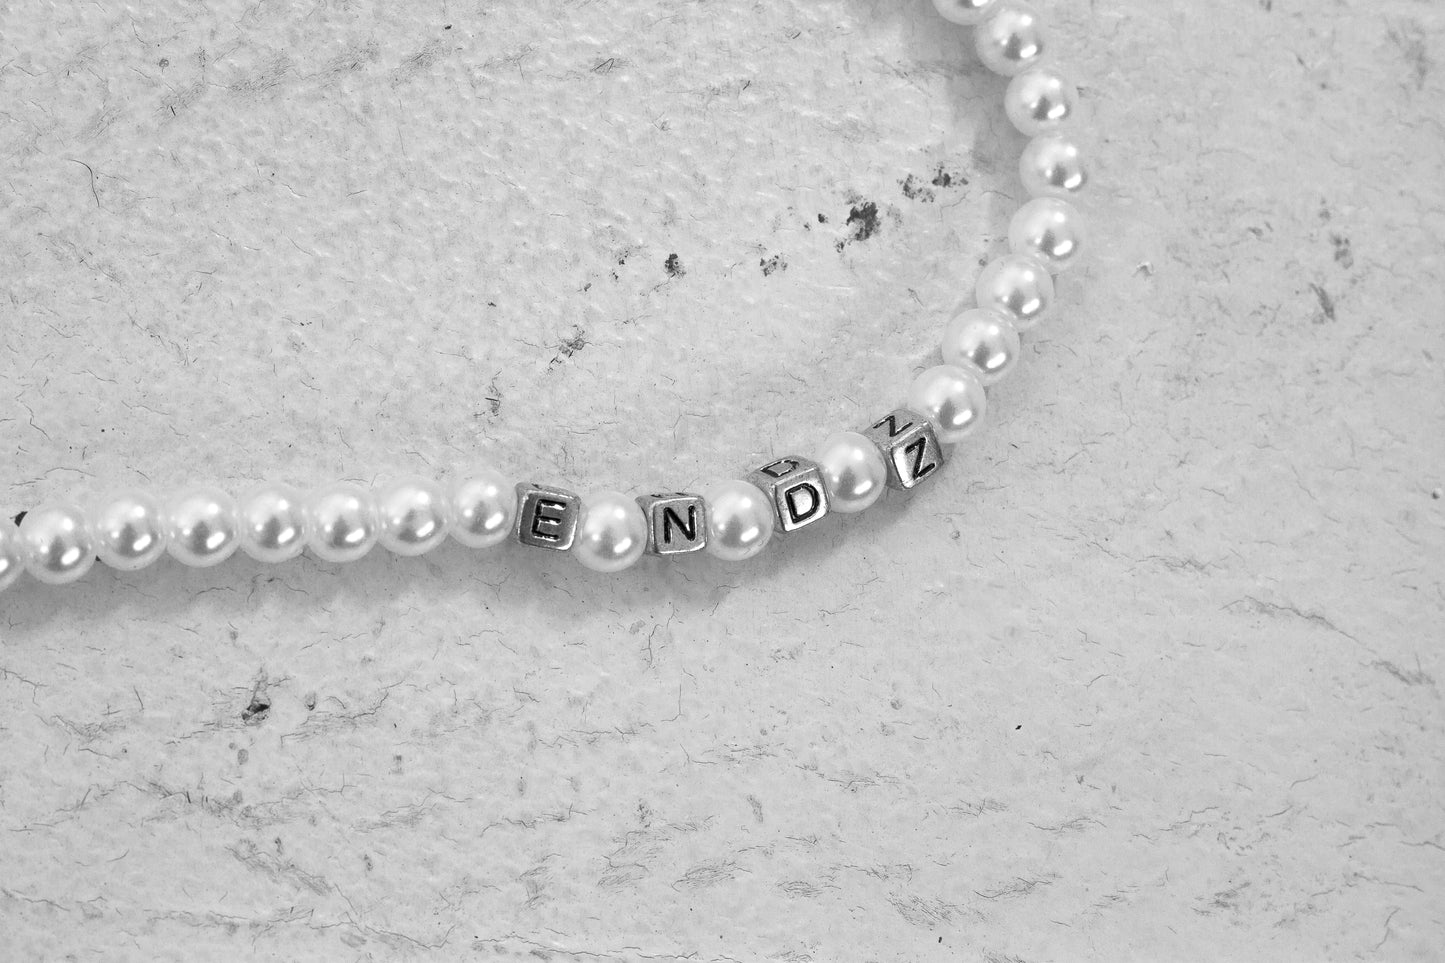 Endz Pearl I Necklace by EnDz